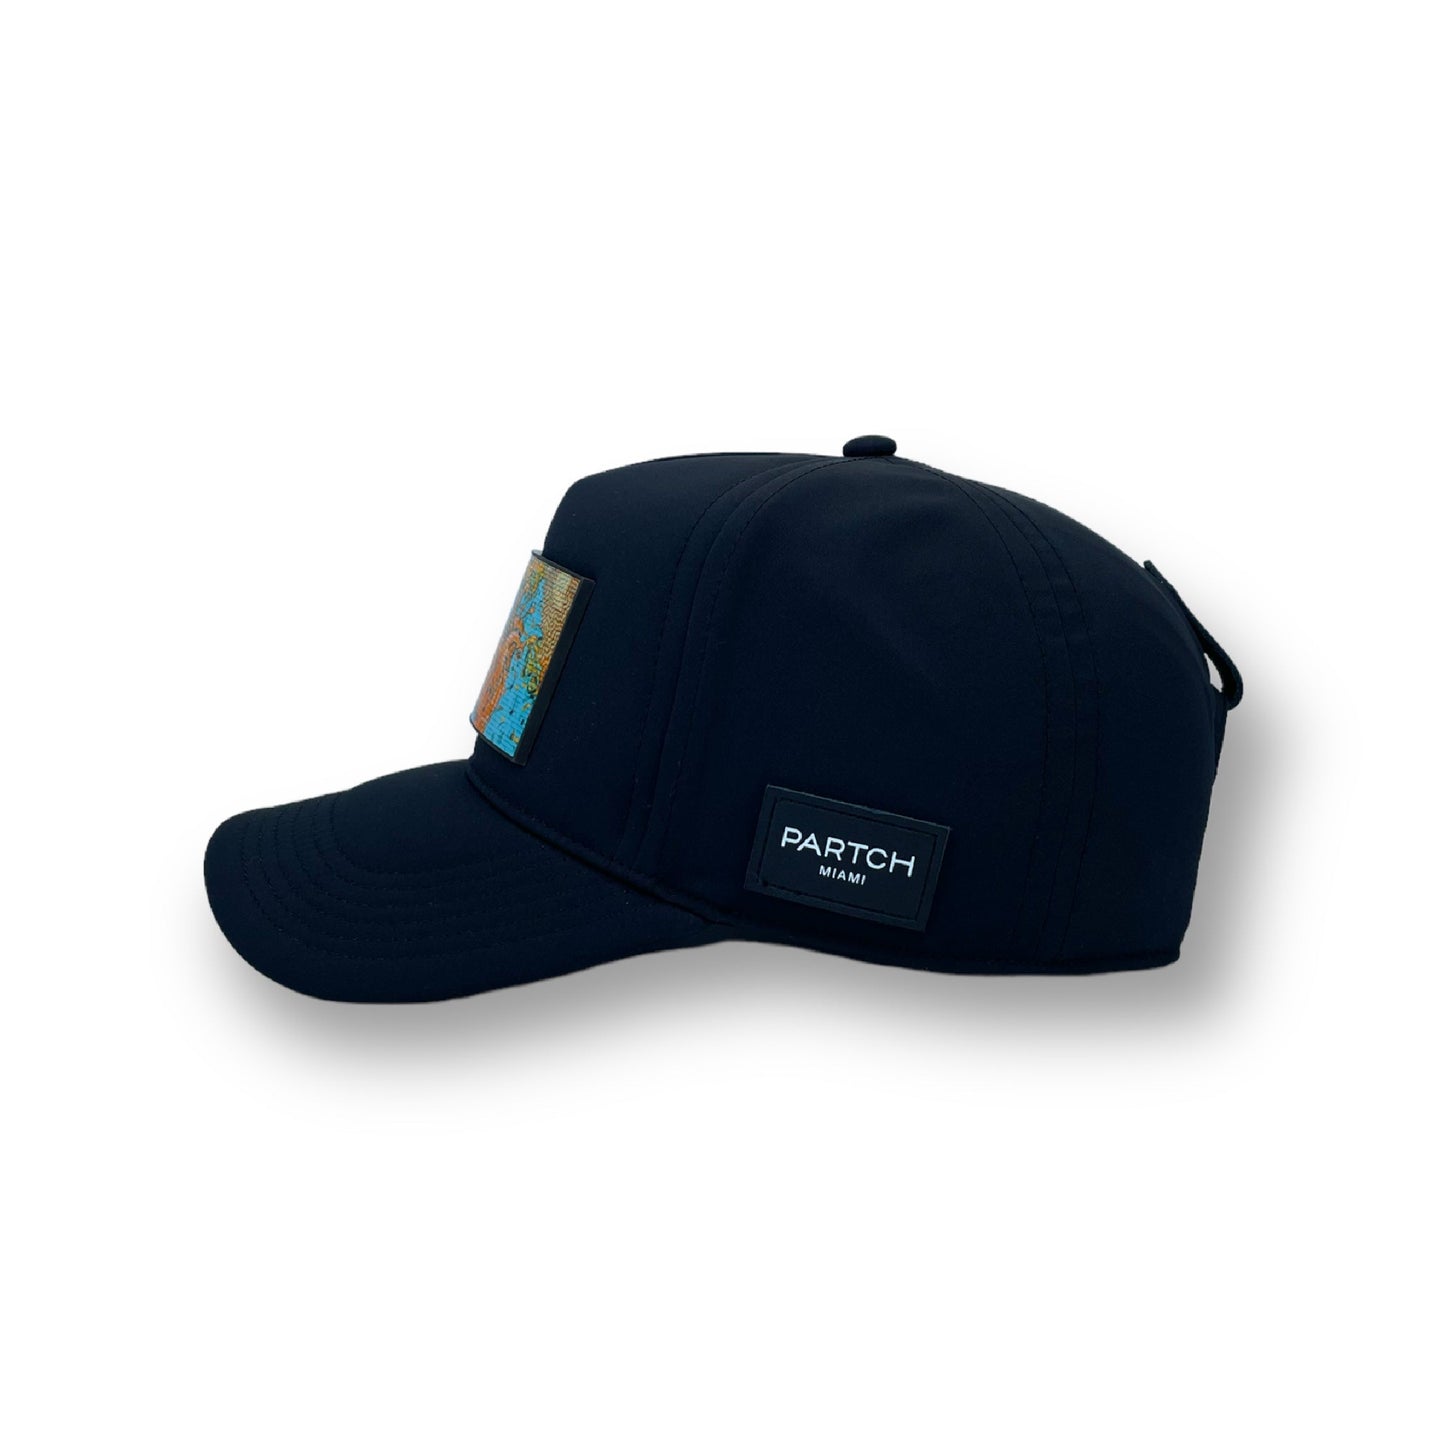 Black Luxury Trucker Cap and Hat Front Patch Art Exsyt Pop | PARTCH